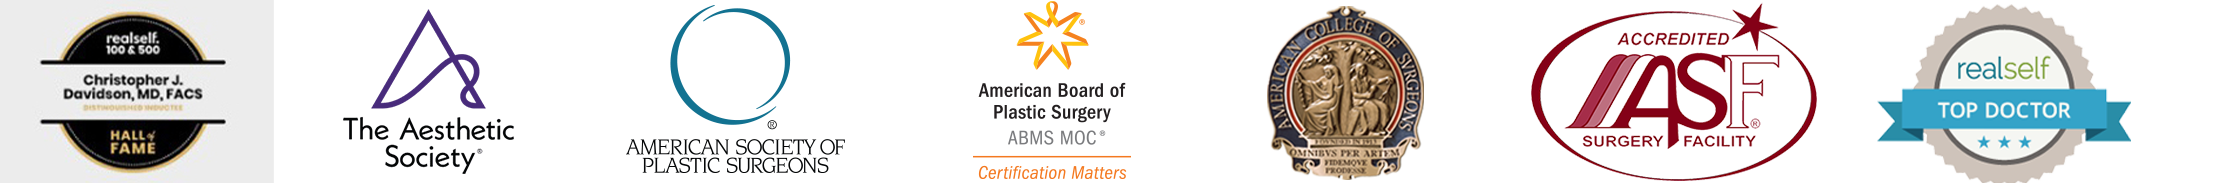 Medical Association Logos